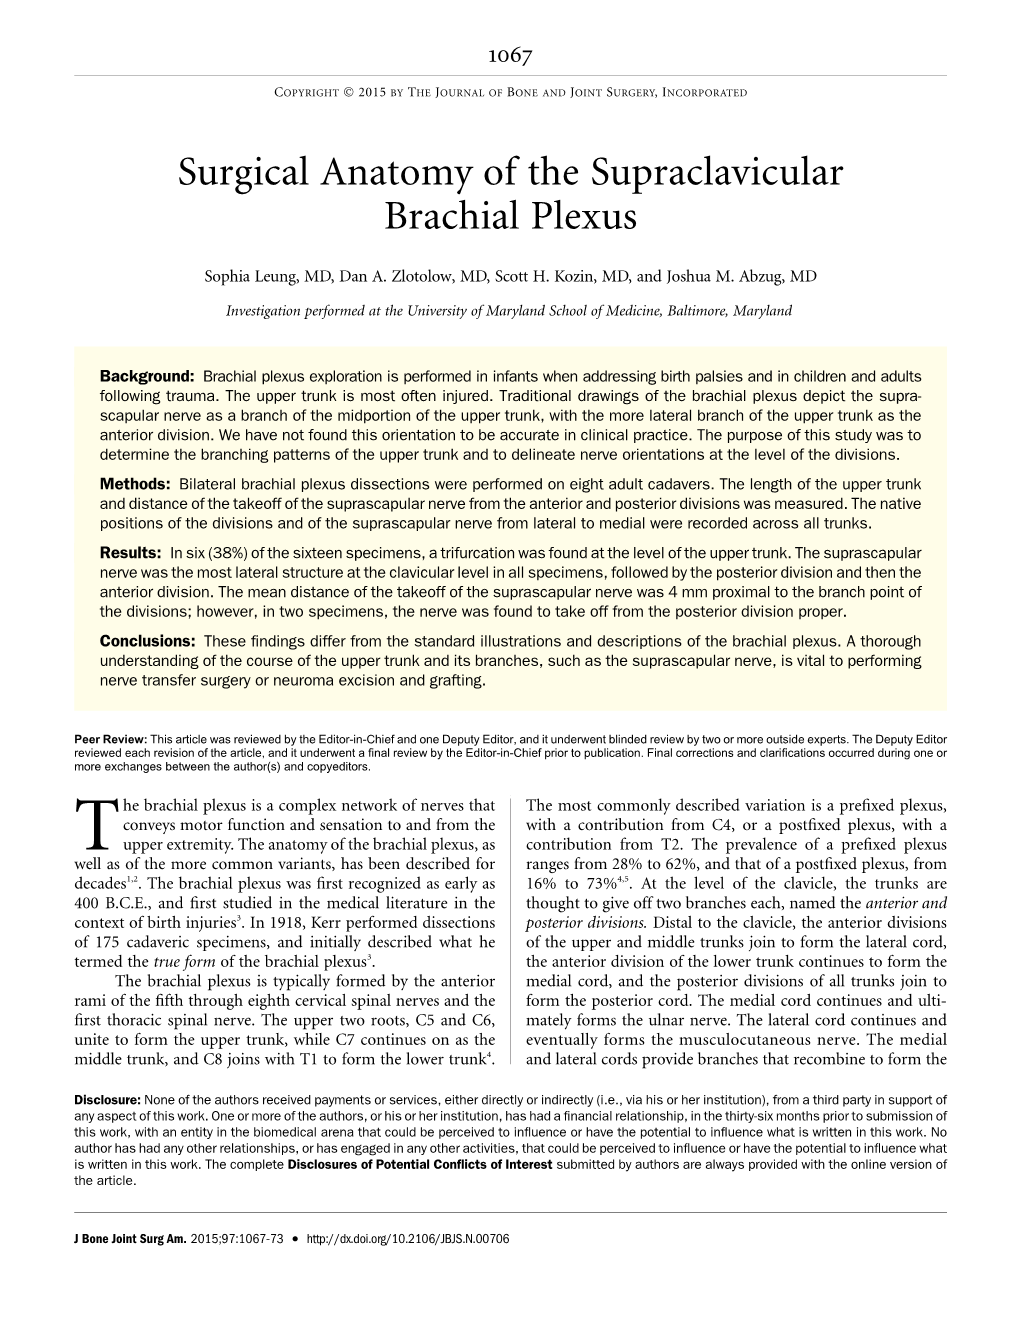 Surgical Anatomy of the Supraclavicular Brachial Plexus